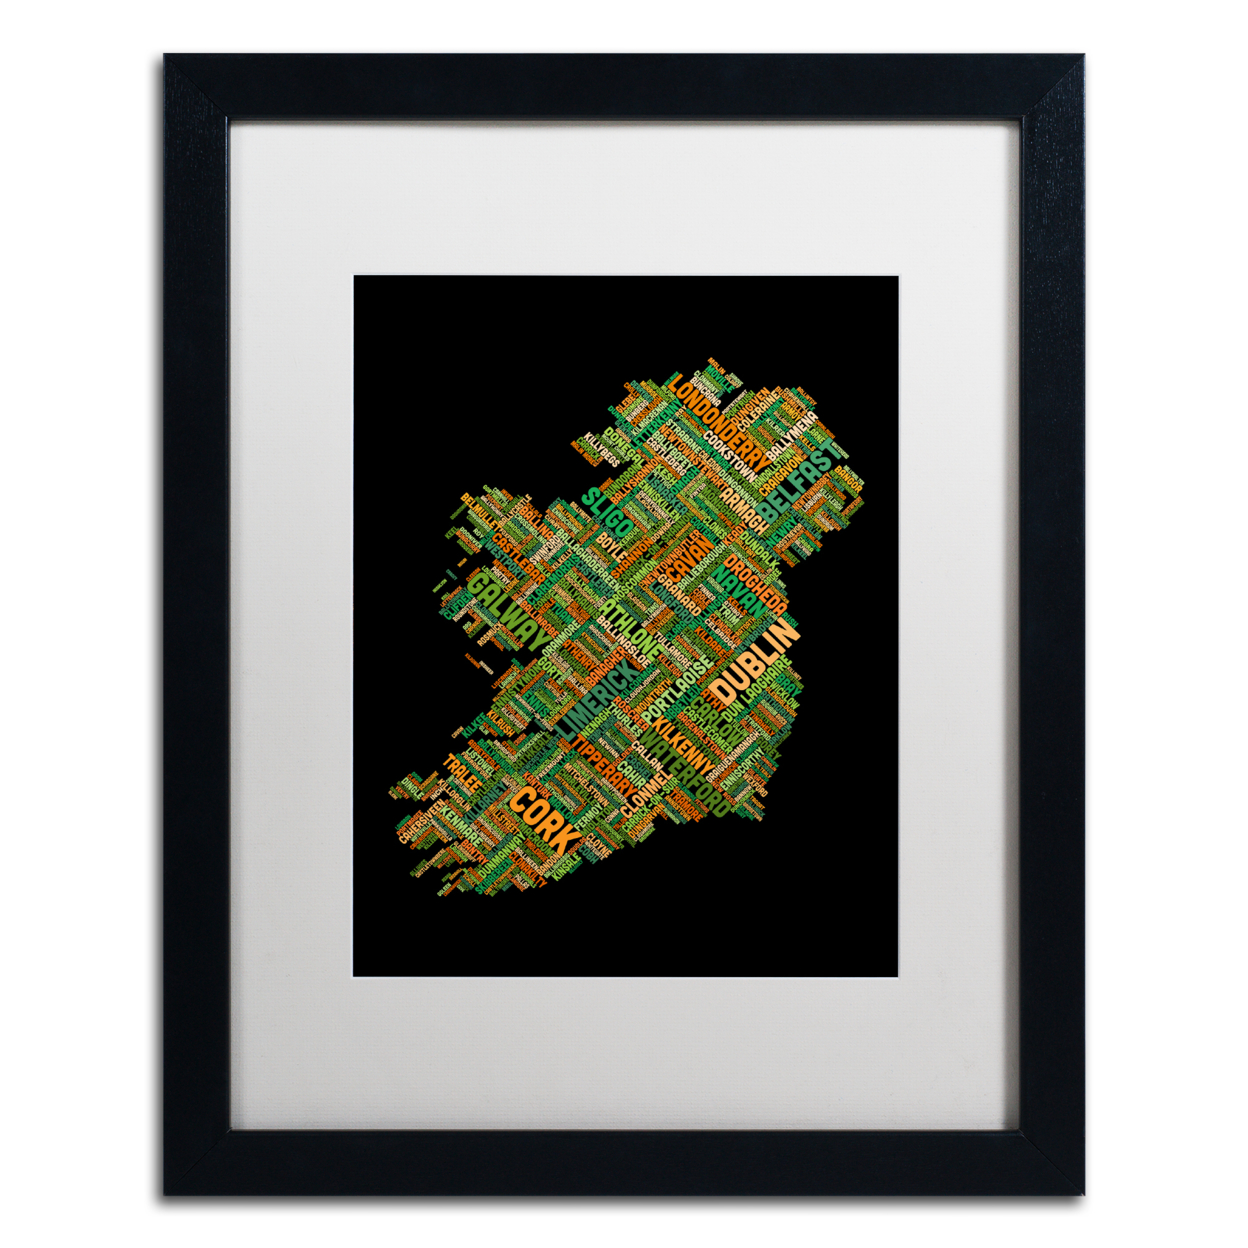 Michael Tompsett 'Ireland Eire City Text Map' Black Wooden Framed Art 18 X 22 Inches